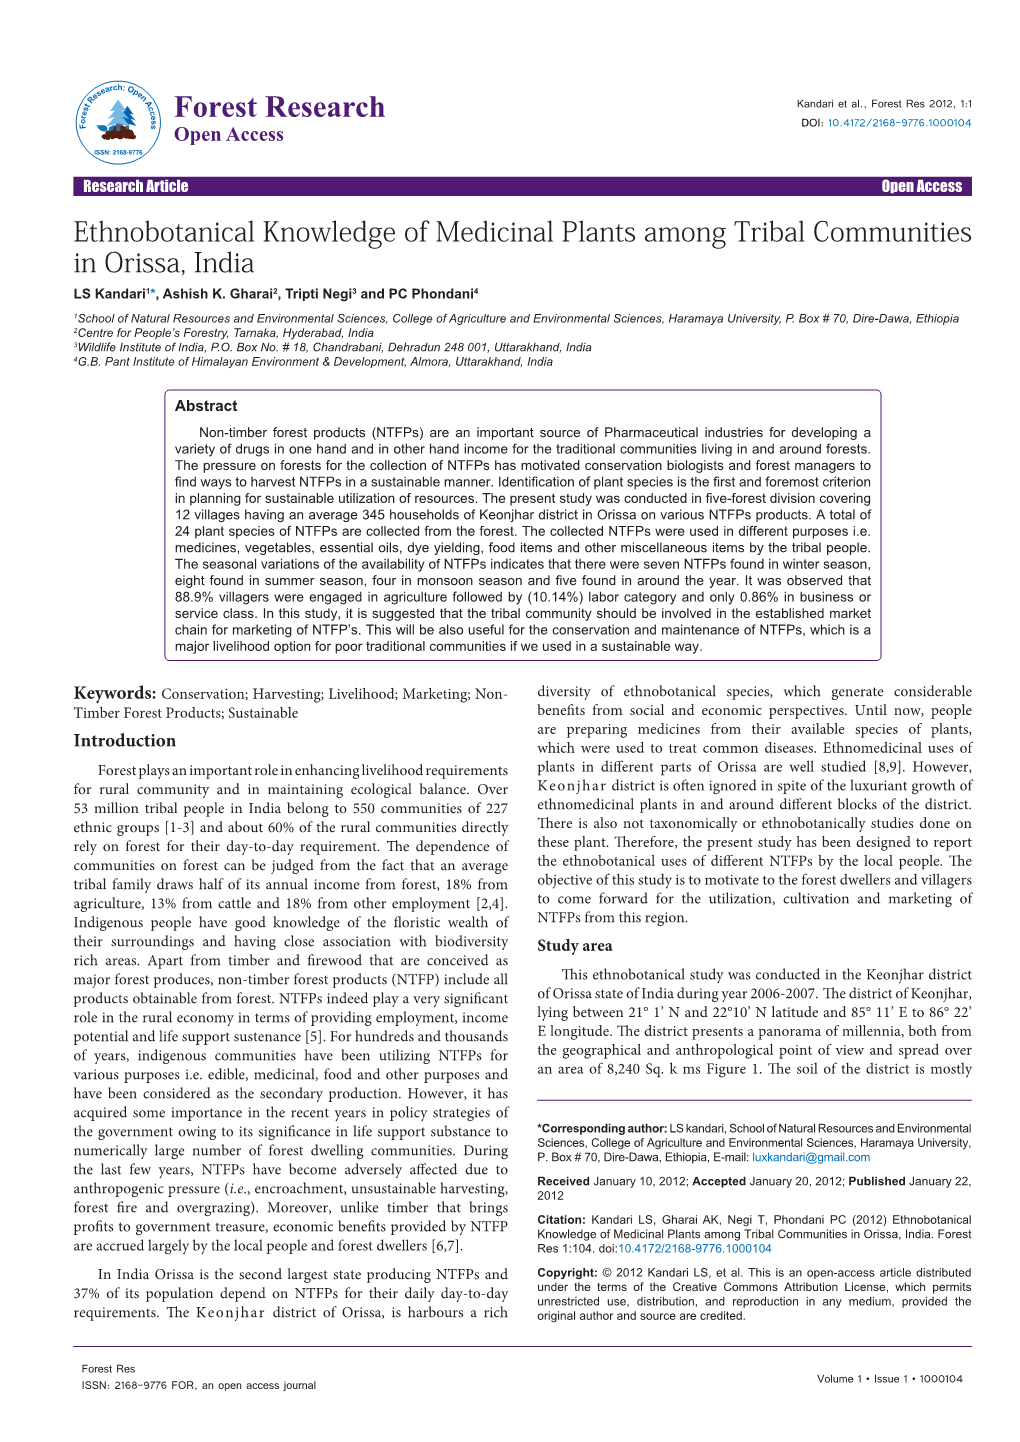 Ethnobotanical Knowledge of Medicinal Plants Among Tribal Communities in Orissa, India LS Kandari1*, Ashish K